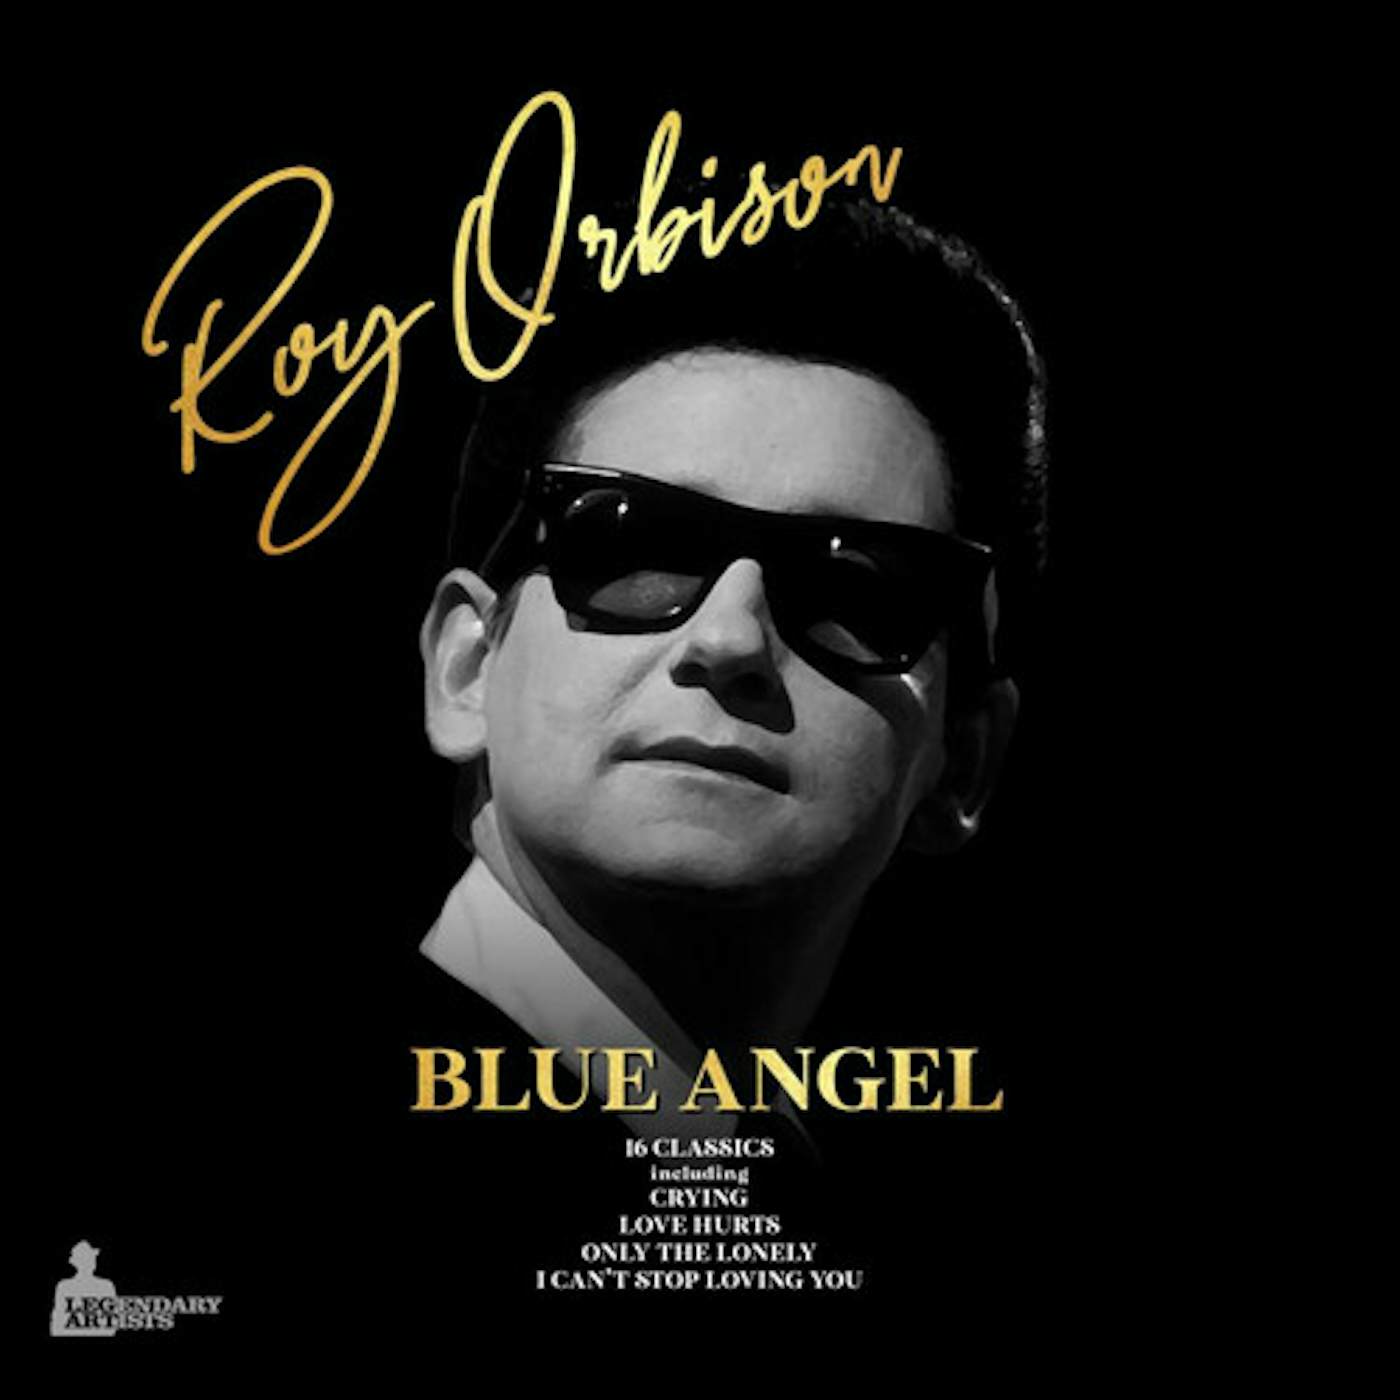 Roy Orbison Blue Angel Vinyl Record